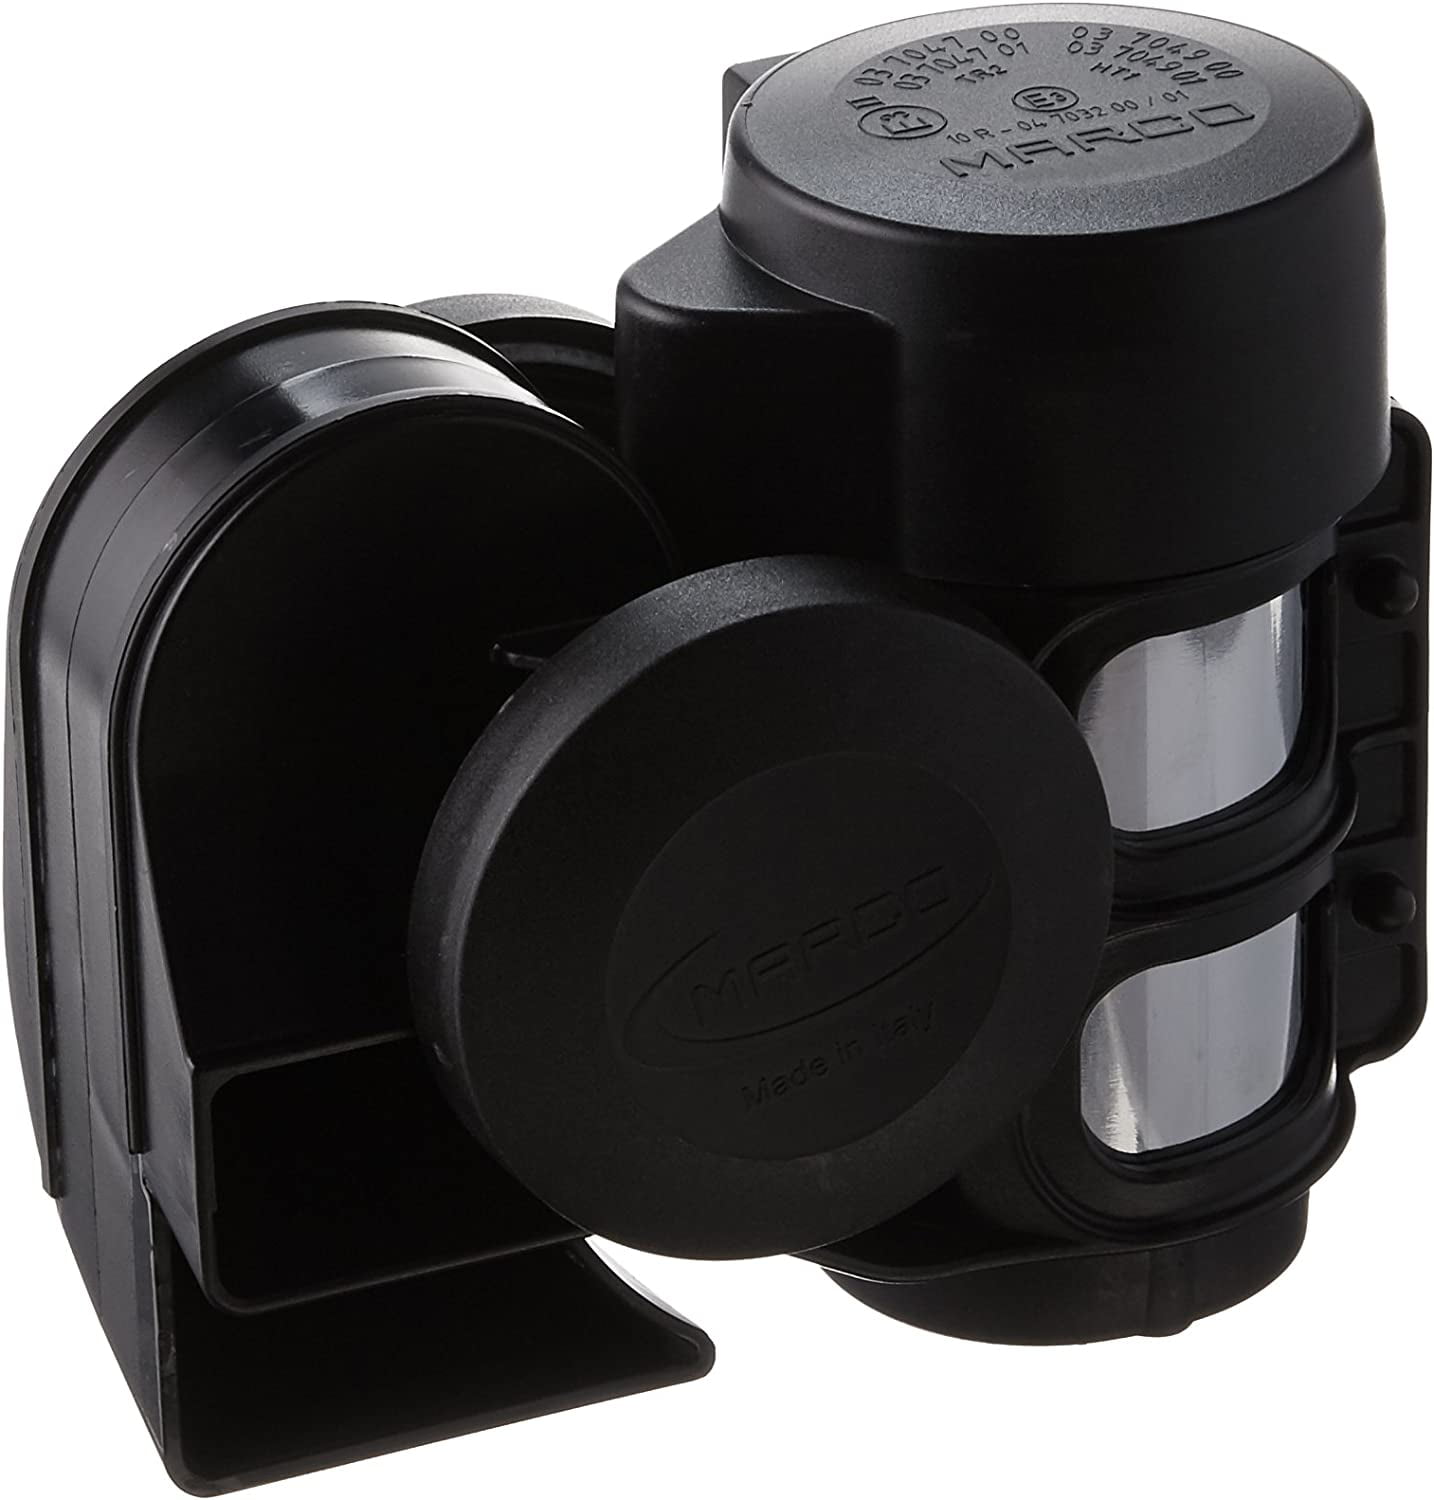 Horn, Buzzer & Reverse Alarm - Compact Twin Tone Air Horn 24 Volt